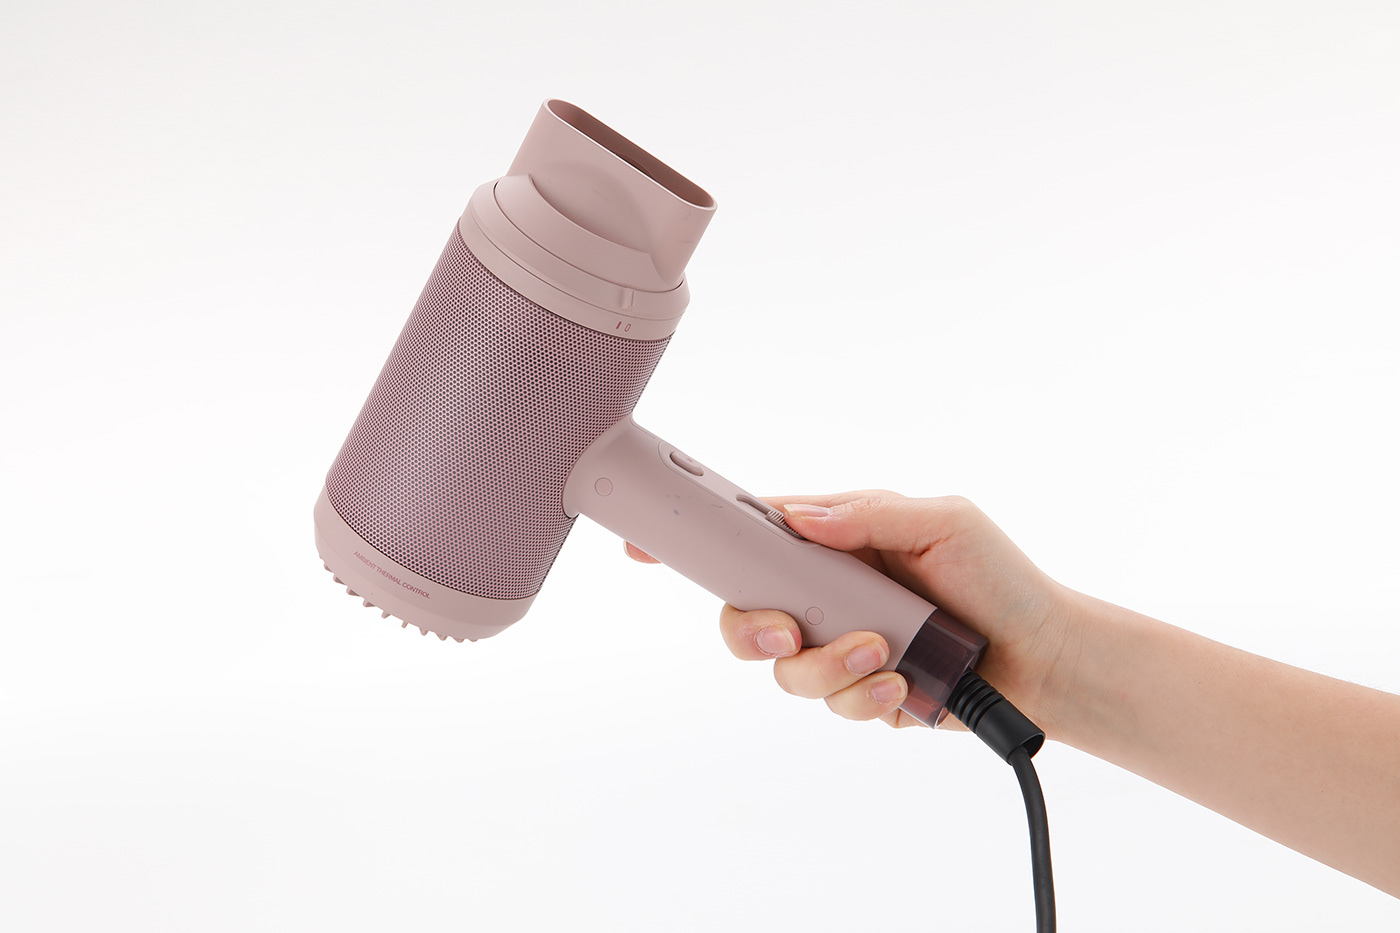 dryer hairdryer living objet objet cosmetic product product design 